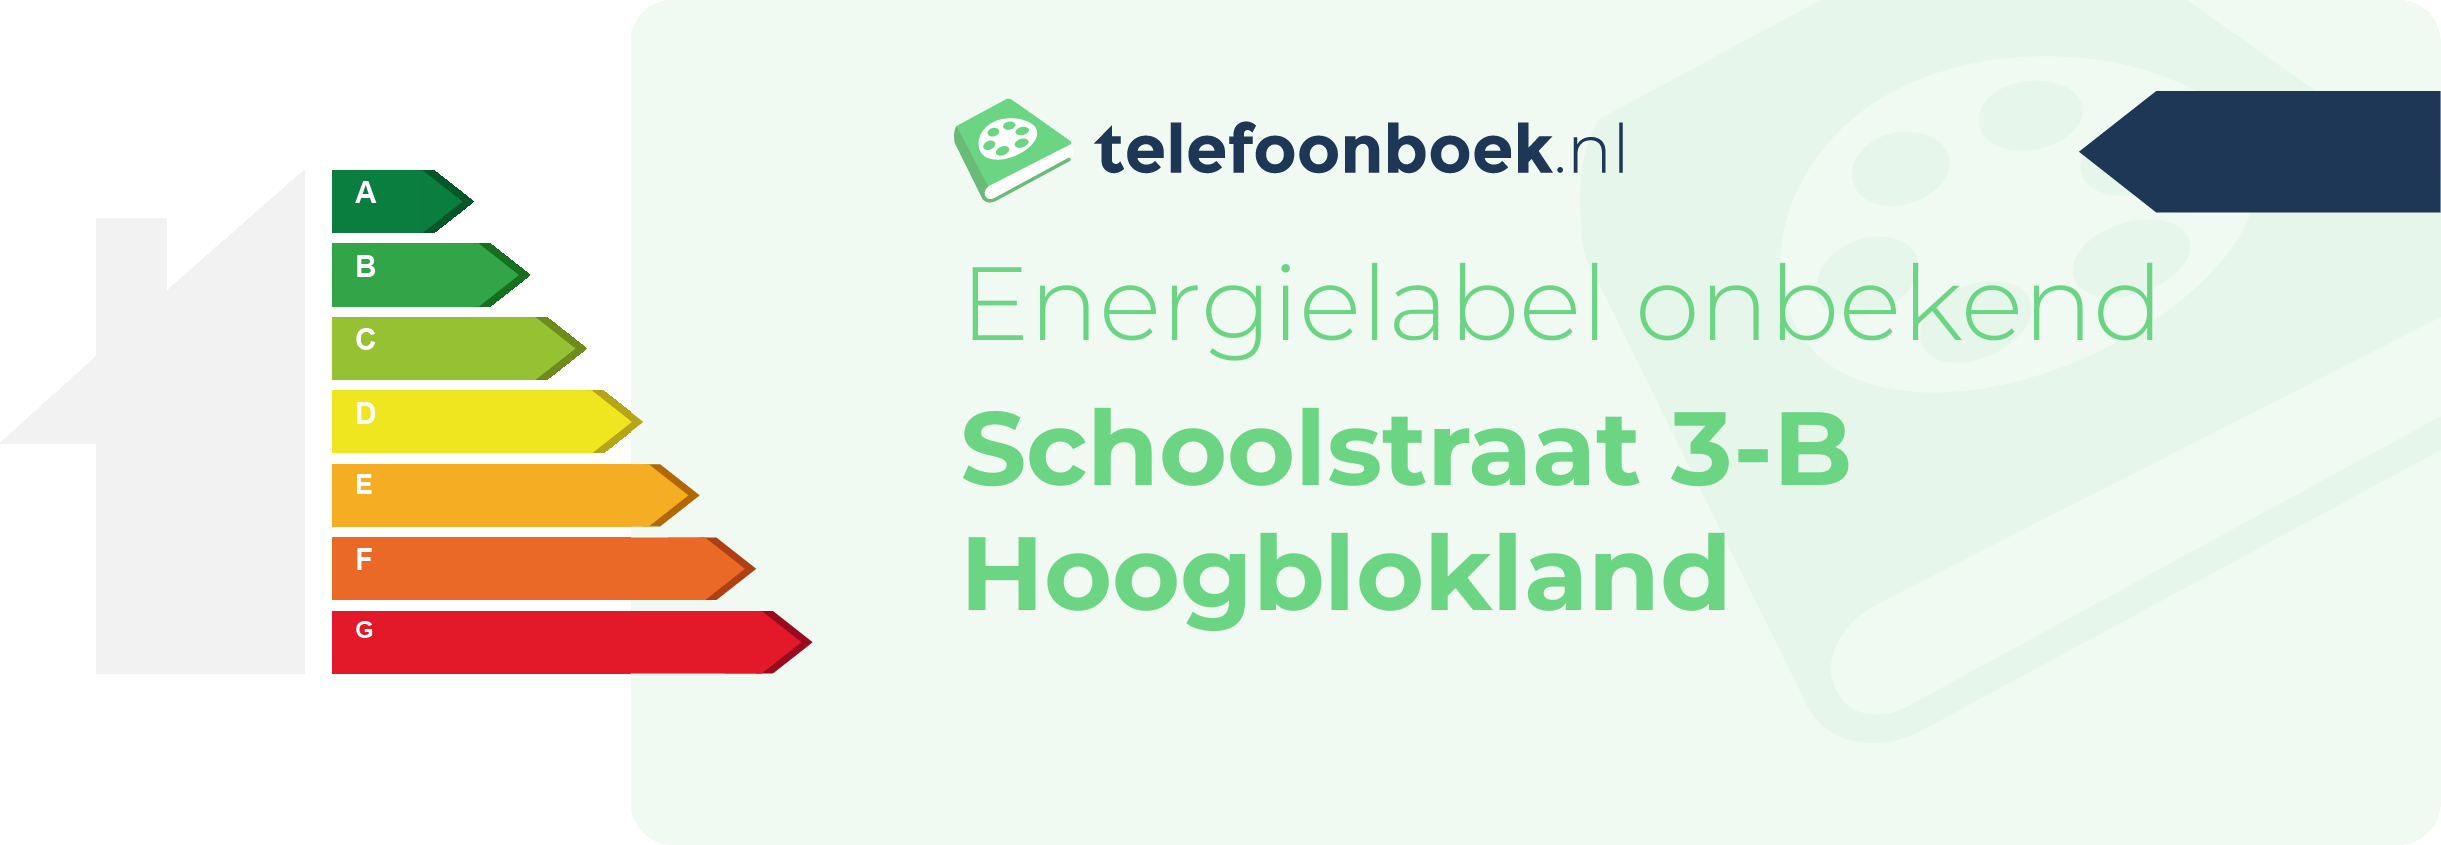 Energielabel Schoolstraat 3-B Hoogblokland